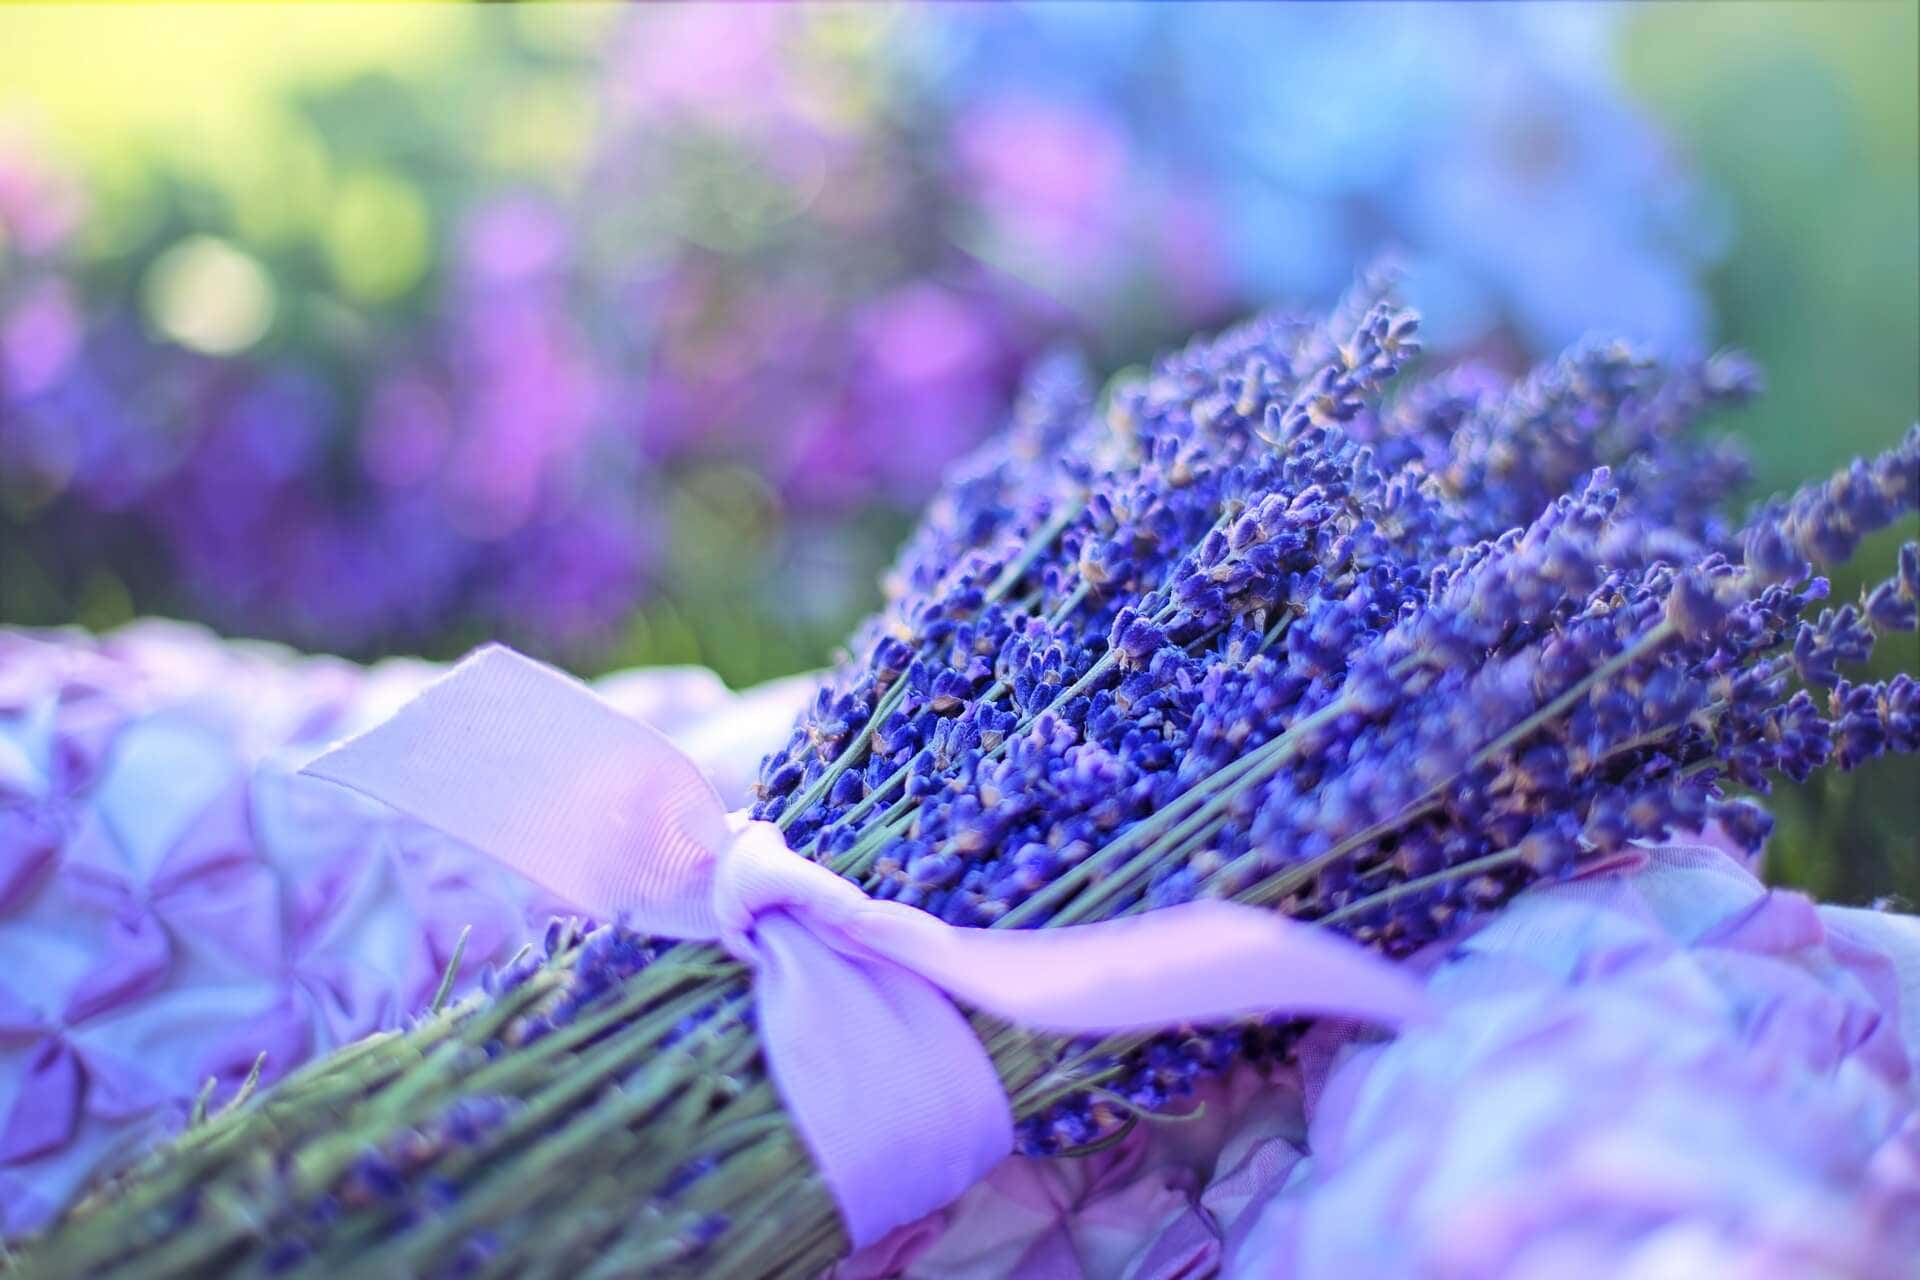 Some lavender.